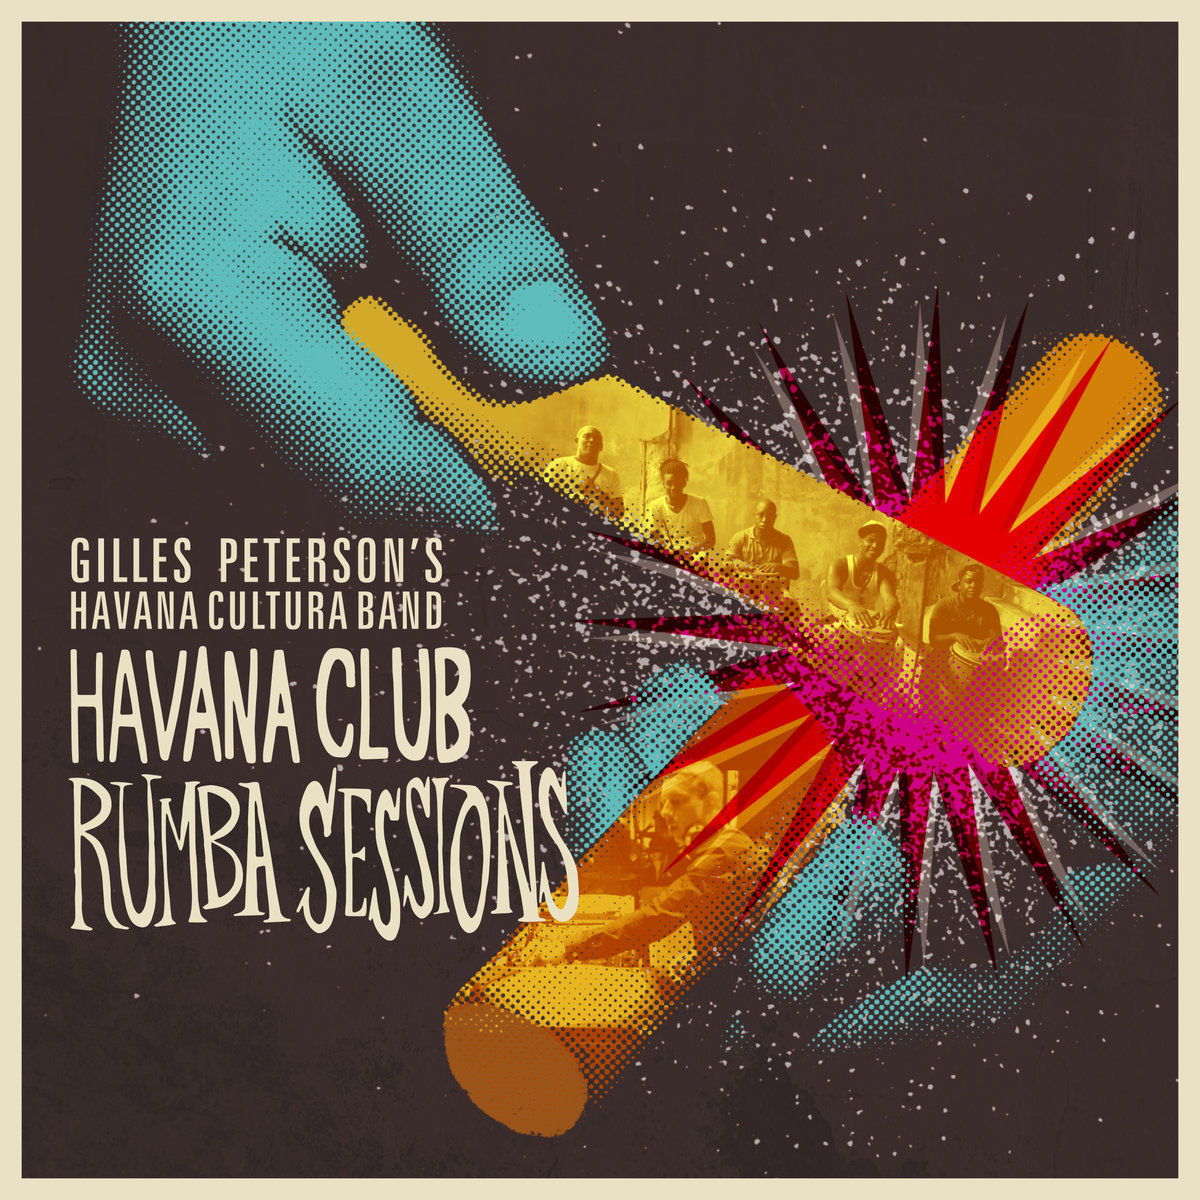 Gilles Petersons´s Havana Cultura Band - Havana Club Rumba Sessions - New  Model Radio